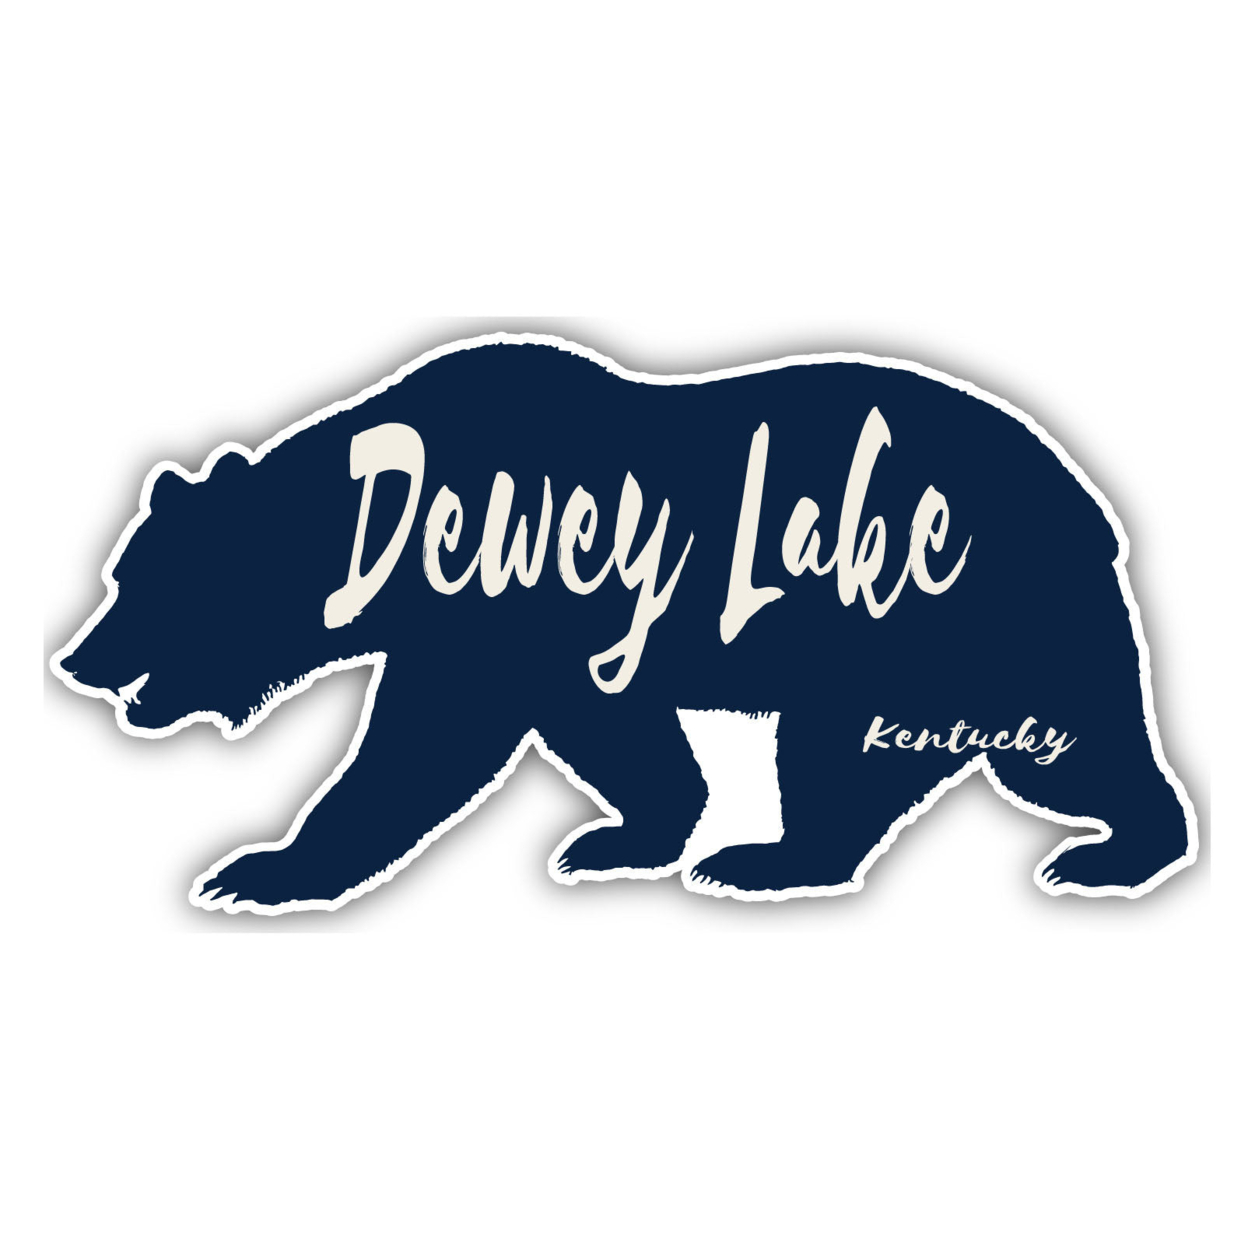 Dewey Lake Kentucky Souvenir Decorative Stickers (Choose Theme And Size) - 4-Pack, 2-Inch, Bear